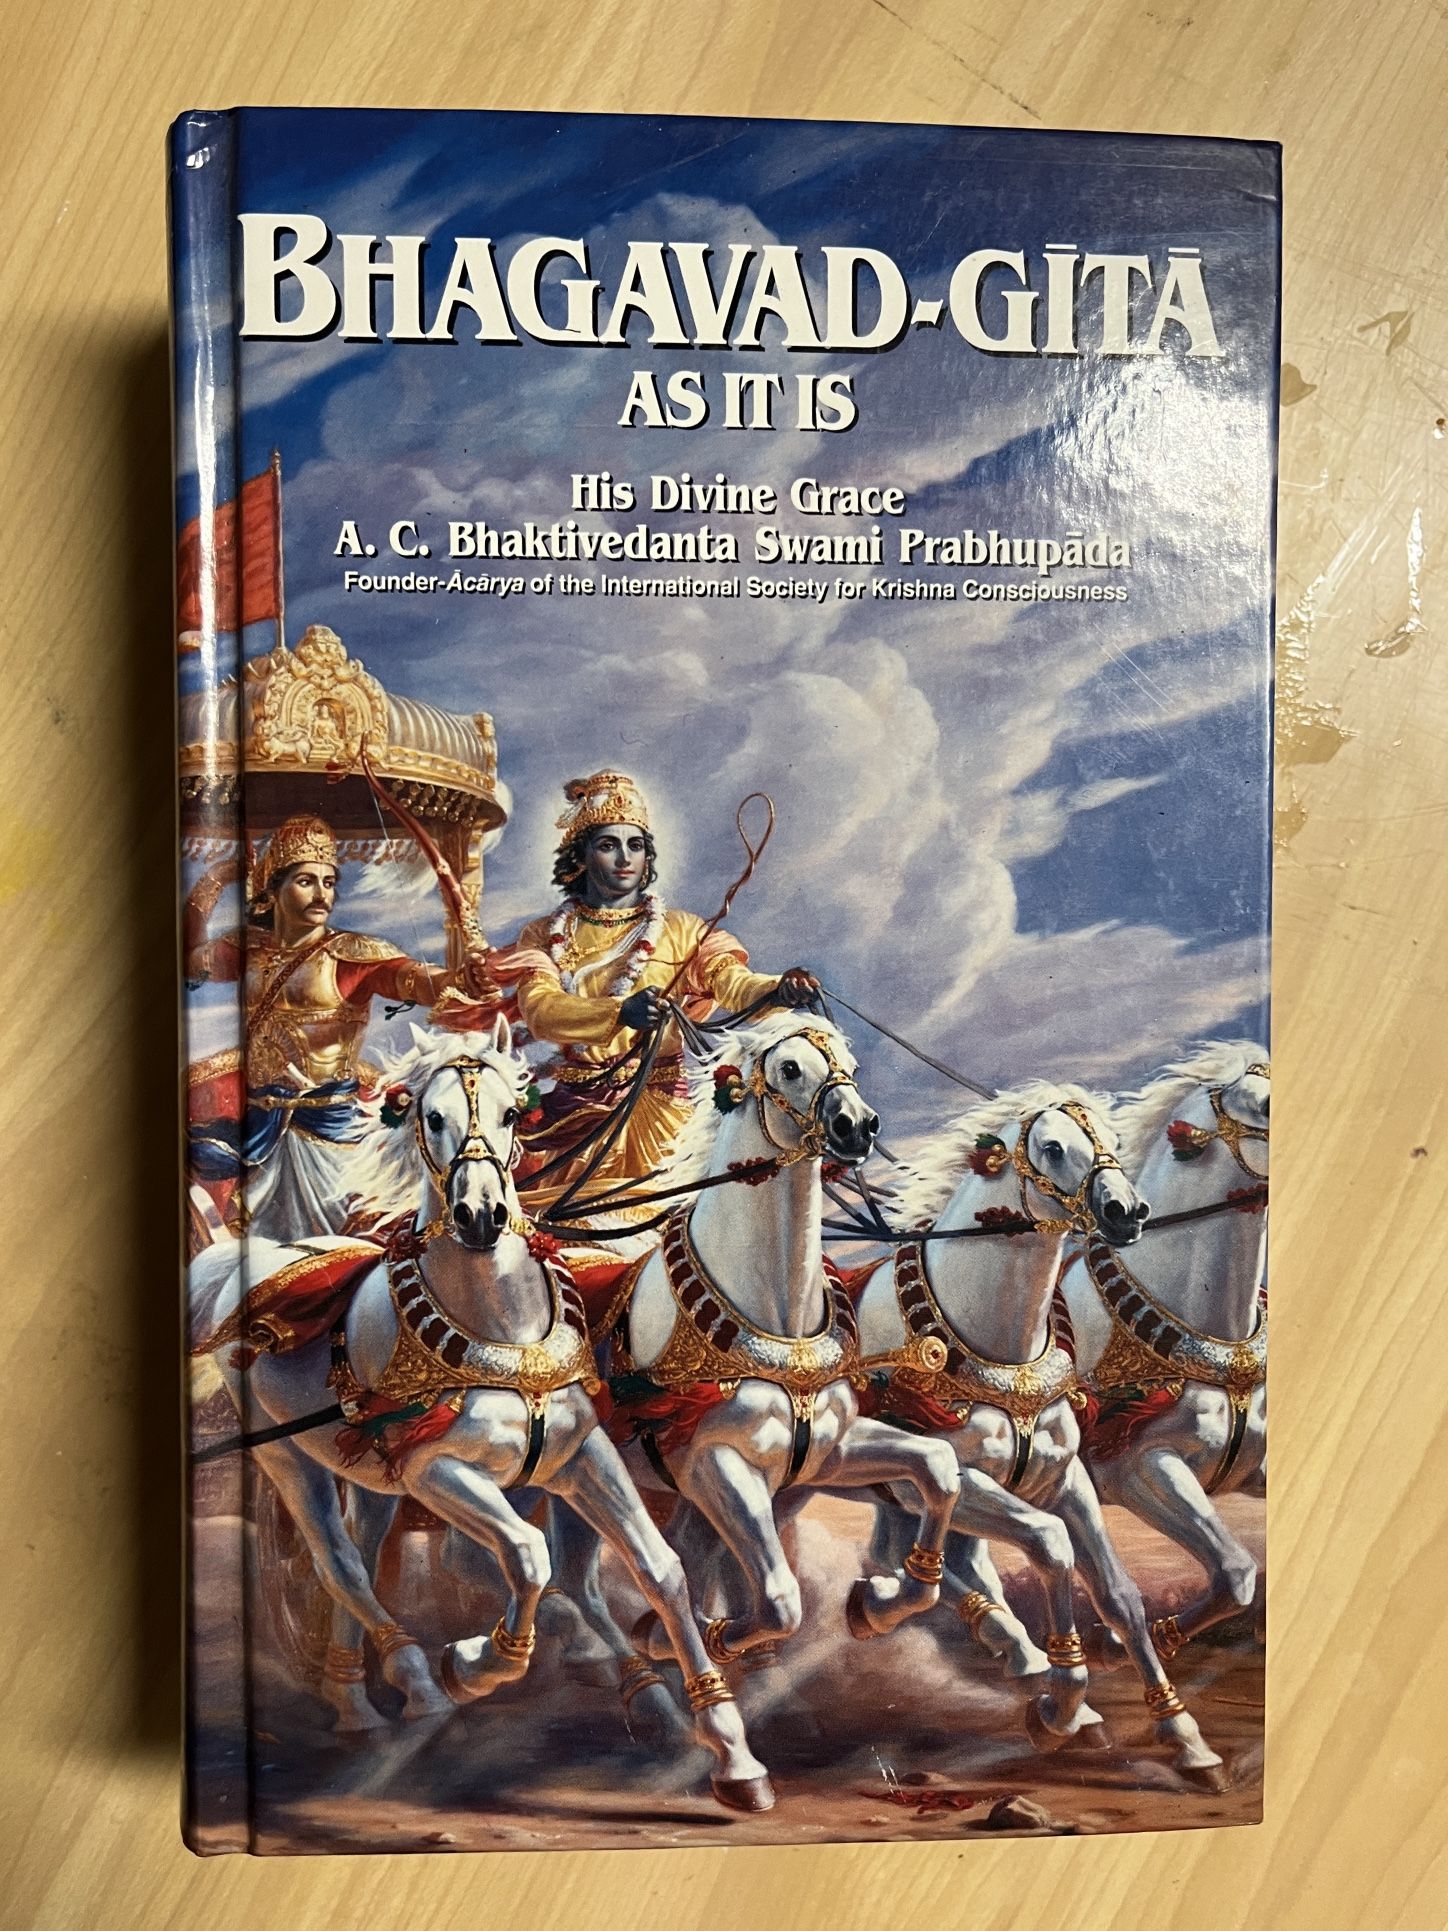 Hardcover Book: Bhagavad Gita As It Is